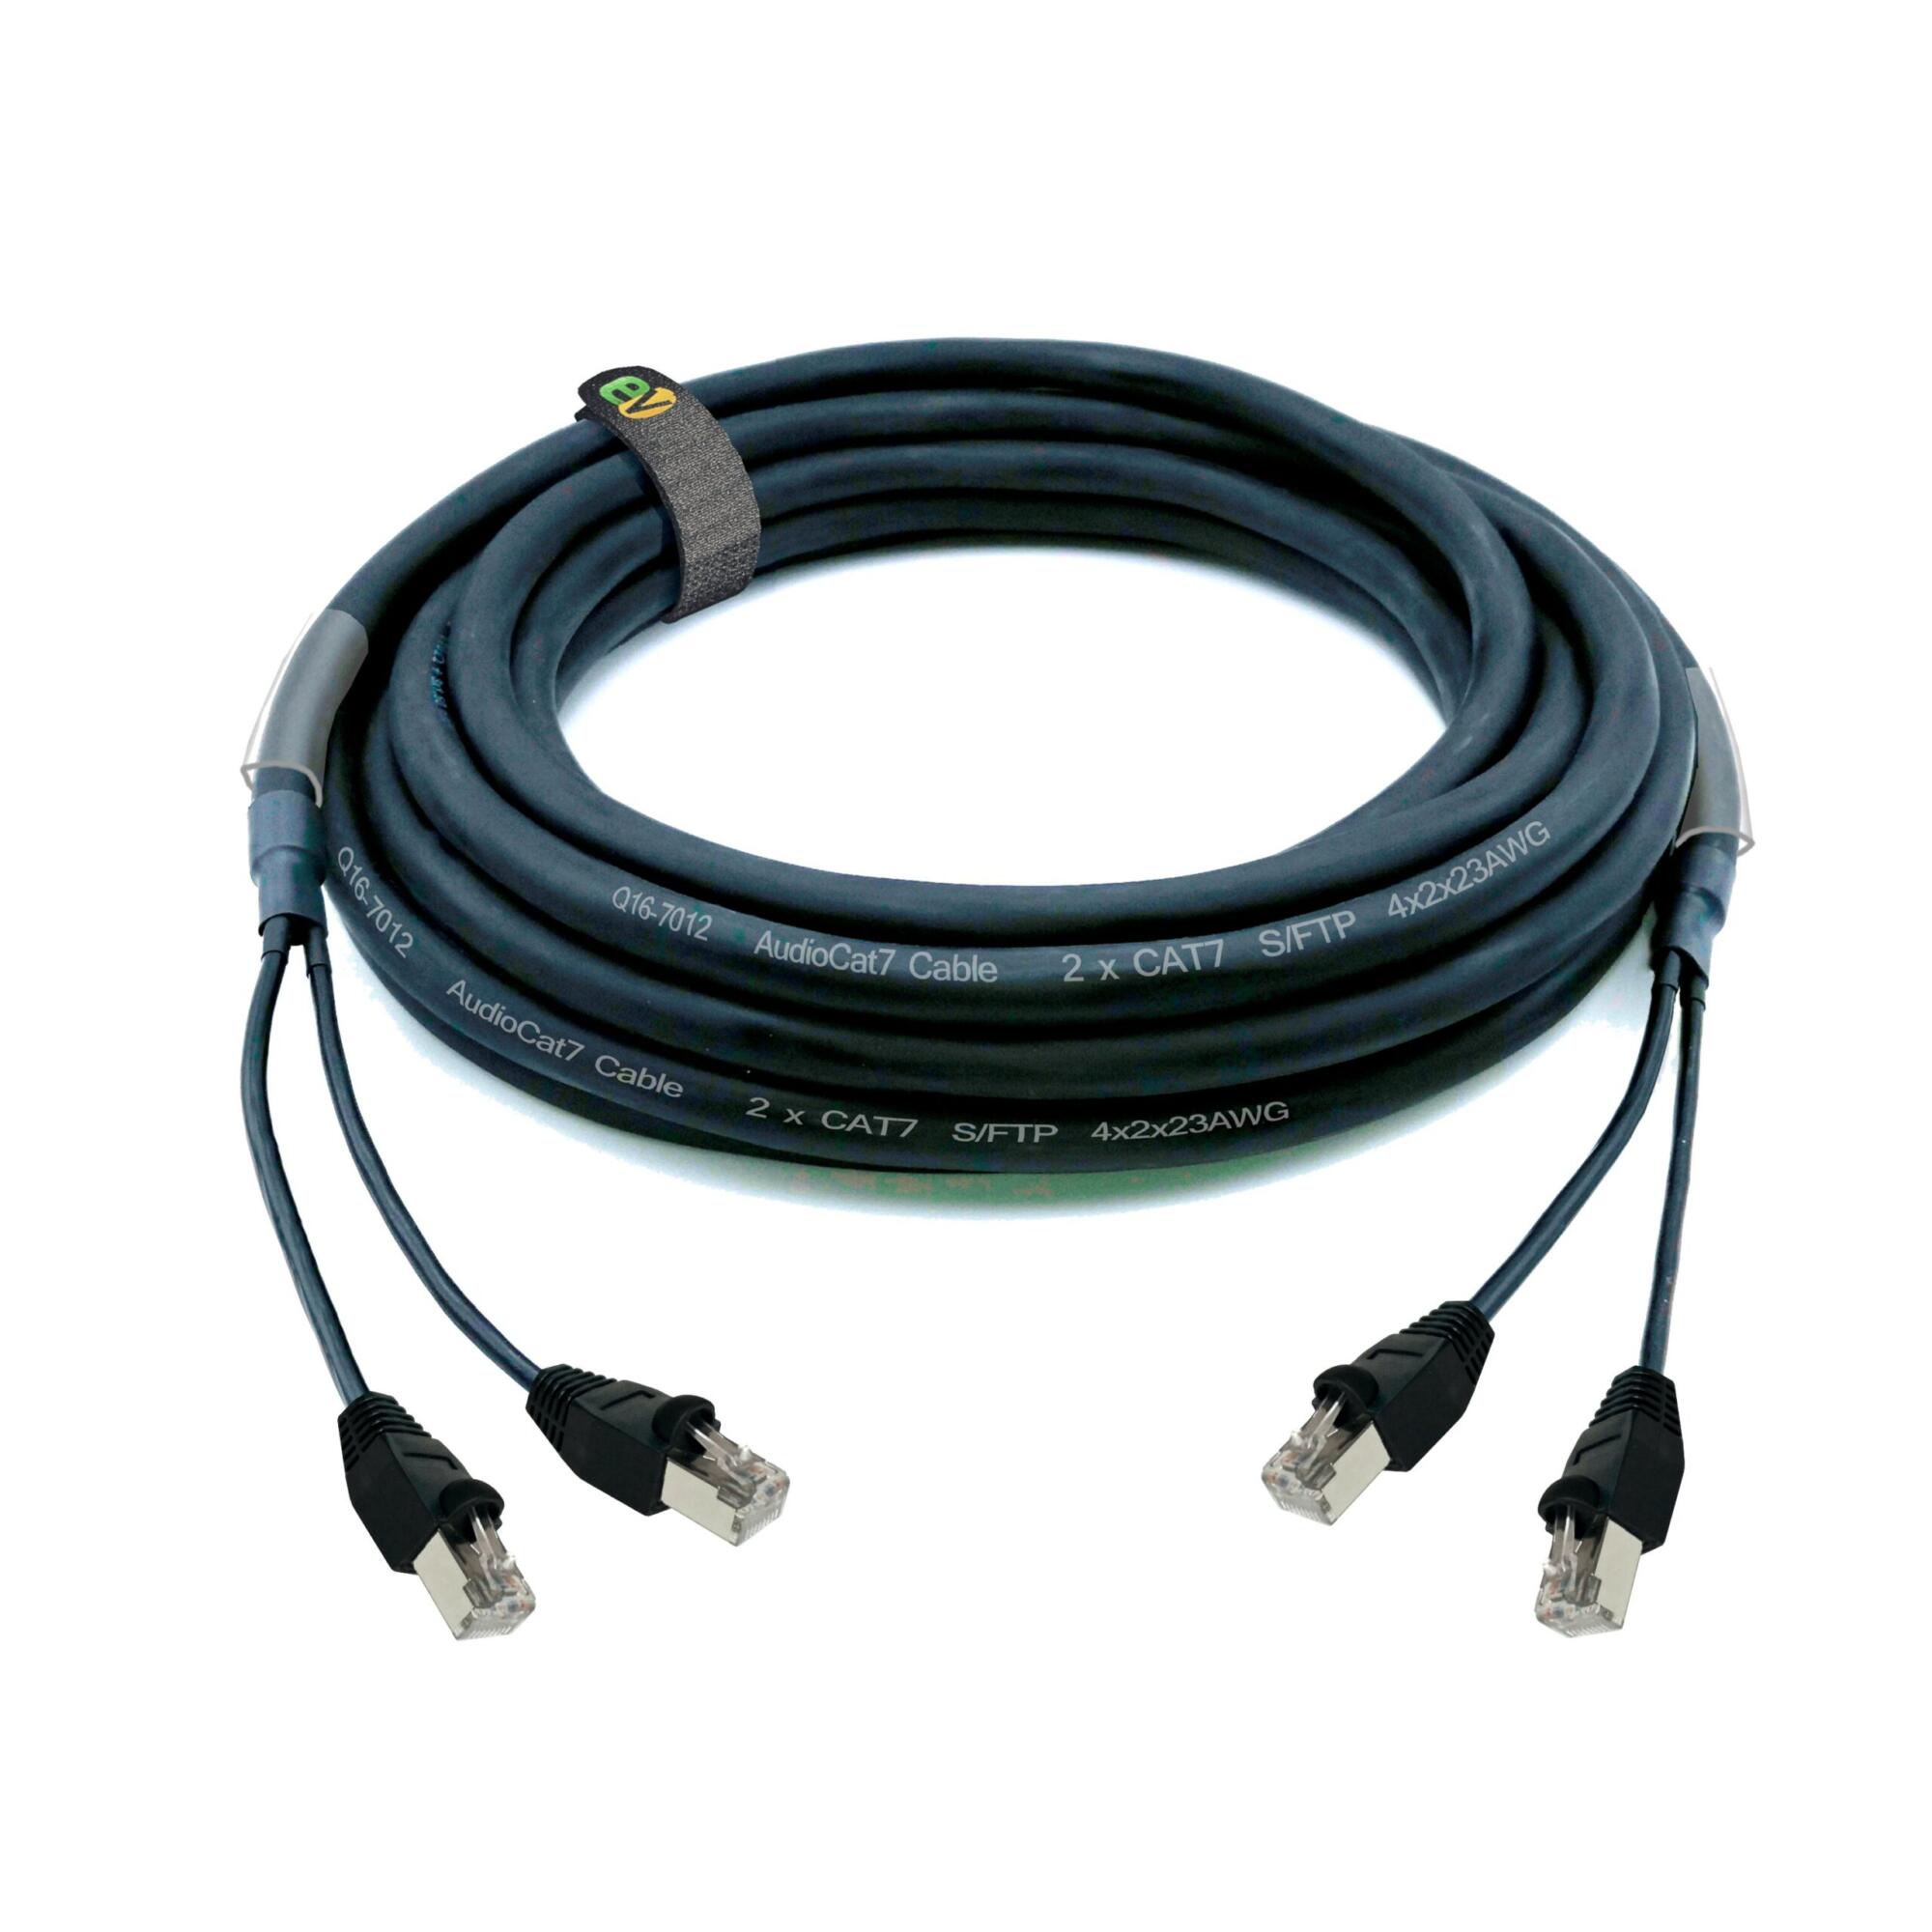 2 x LAN CAT7 S/FTP hose with RJ45